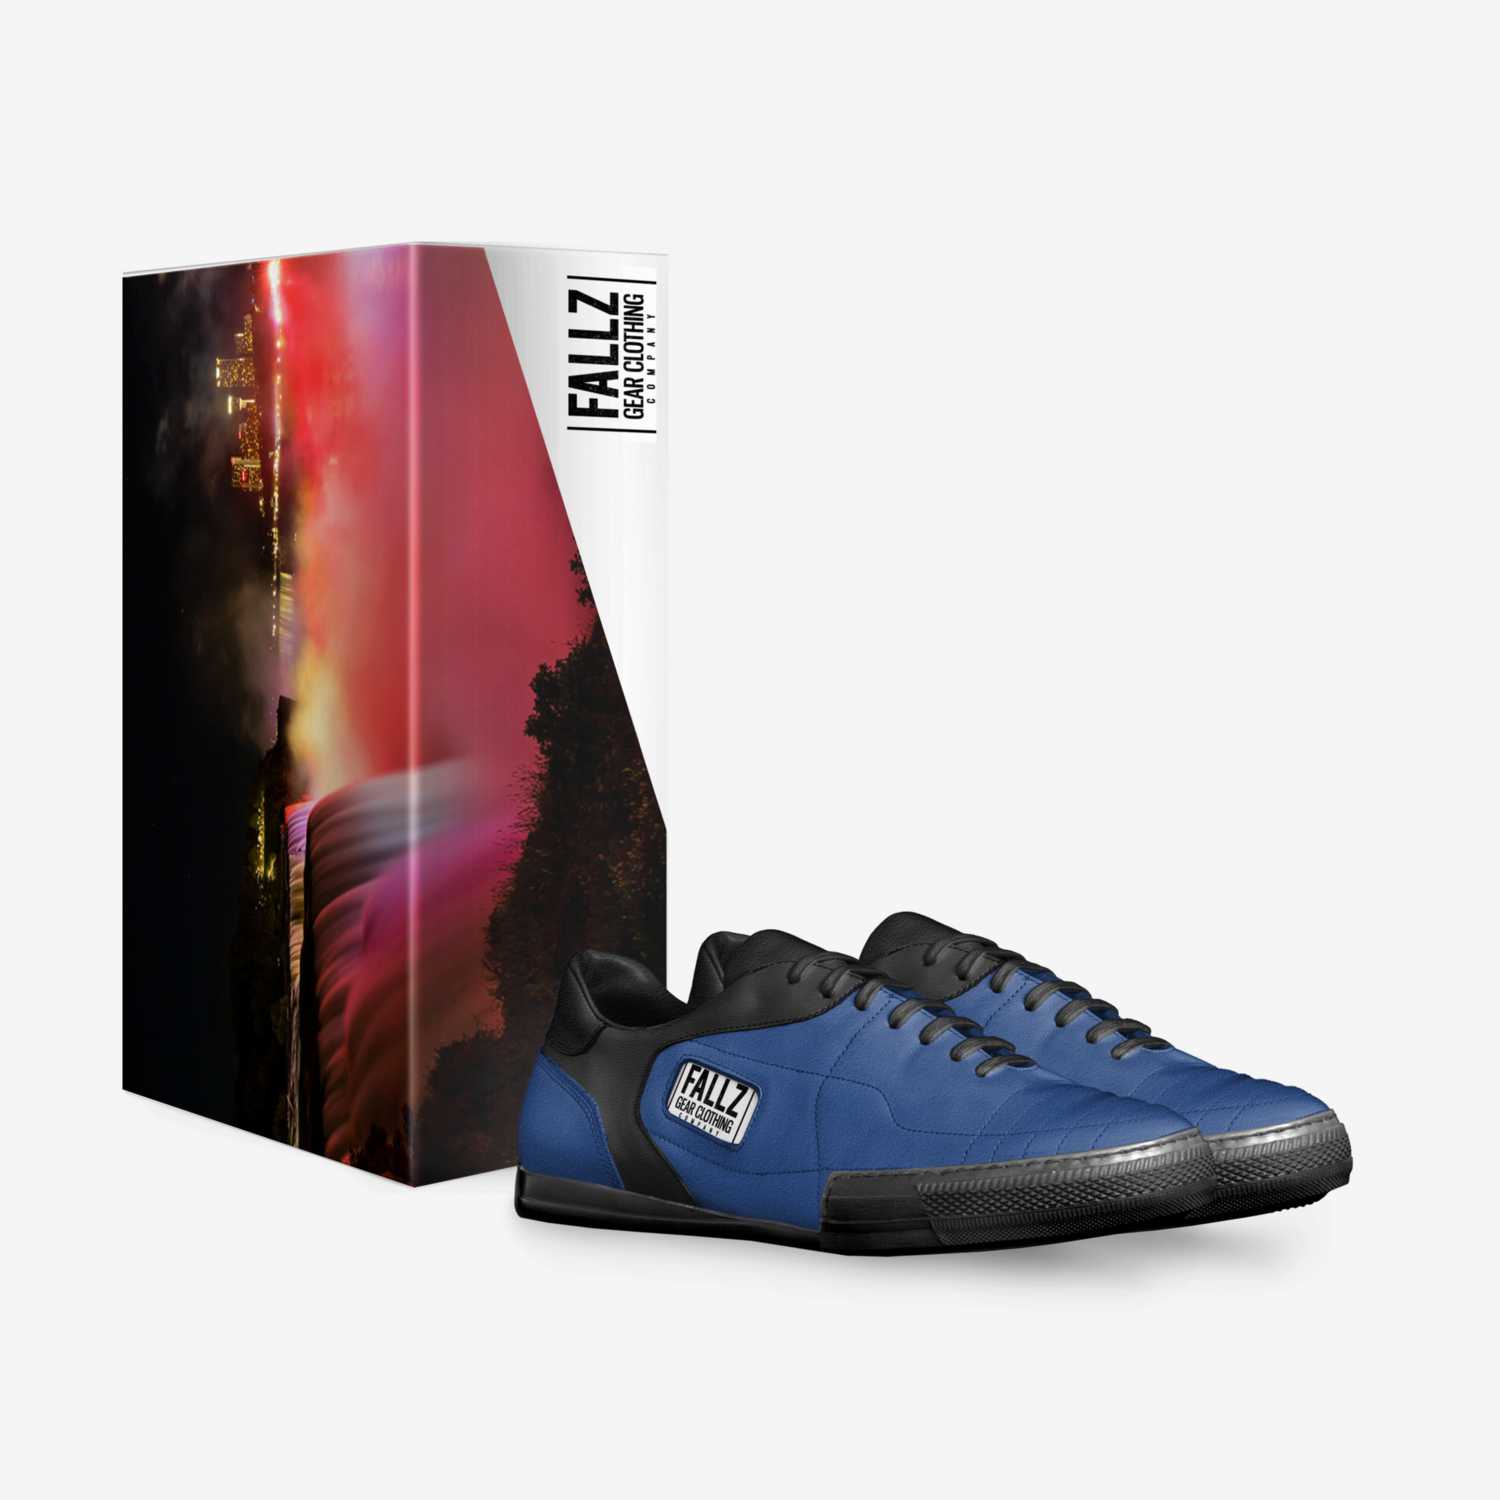 Fallz Gear: Rapids custom made in Italy shoes by Fallz Gear | Box view